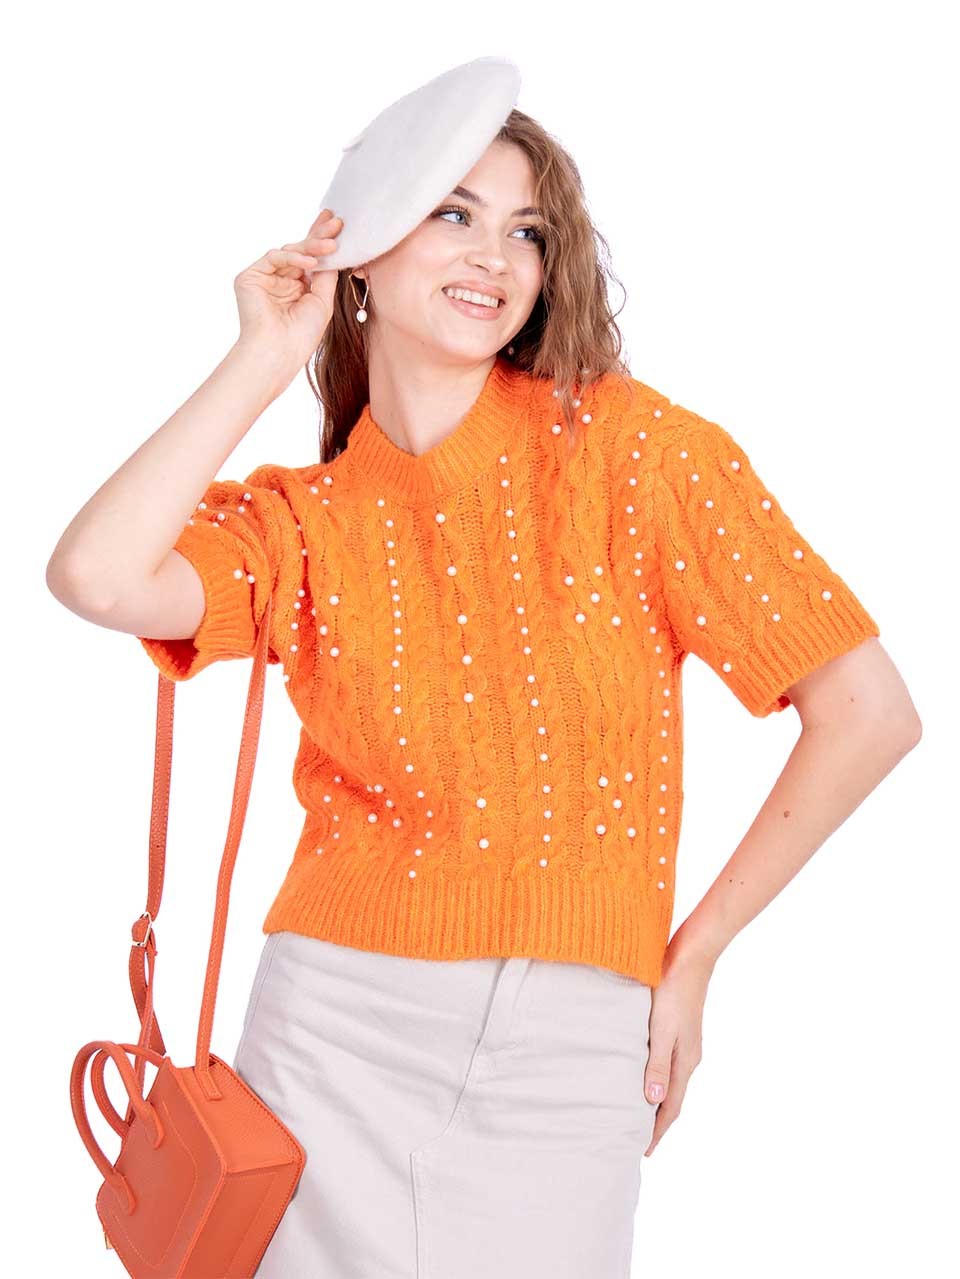 Pearl decorated Sweater Orange